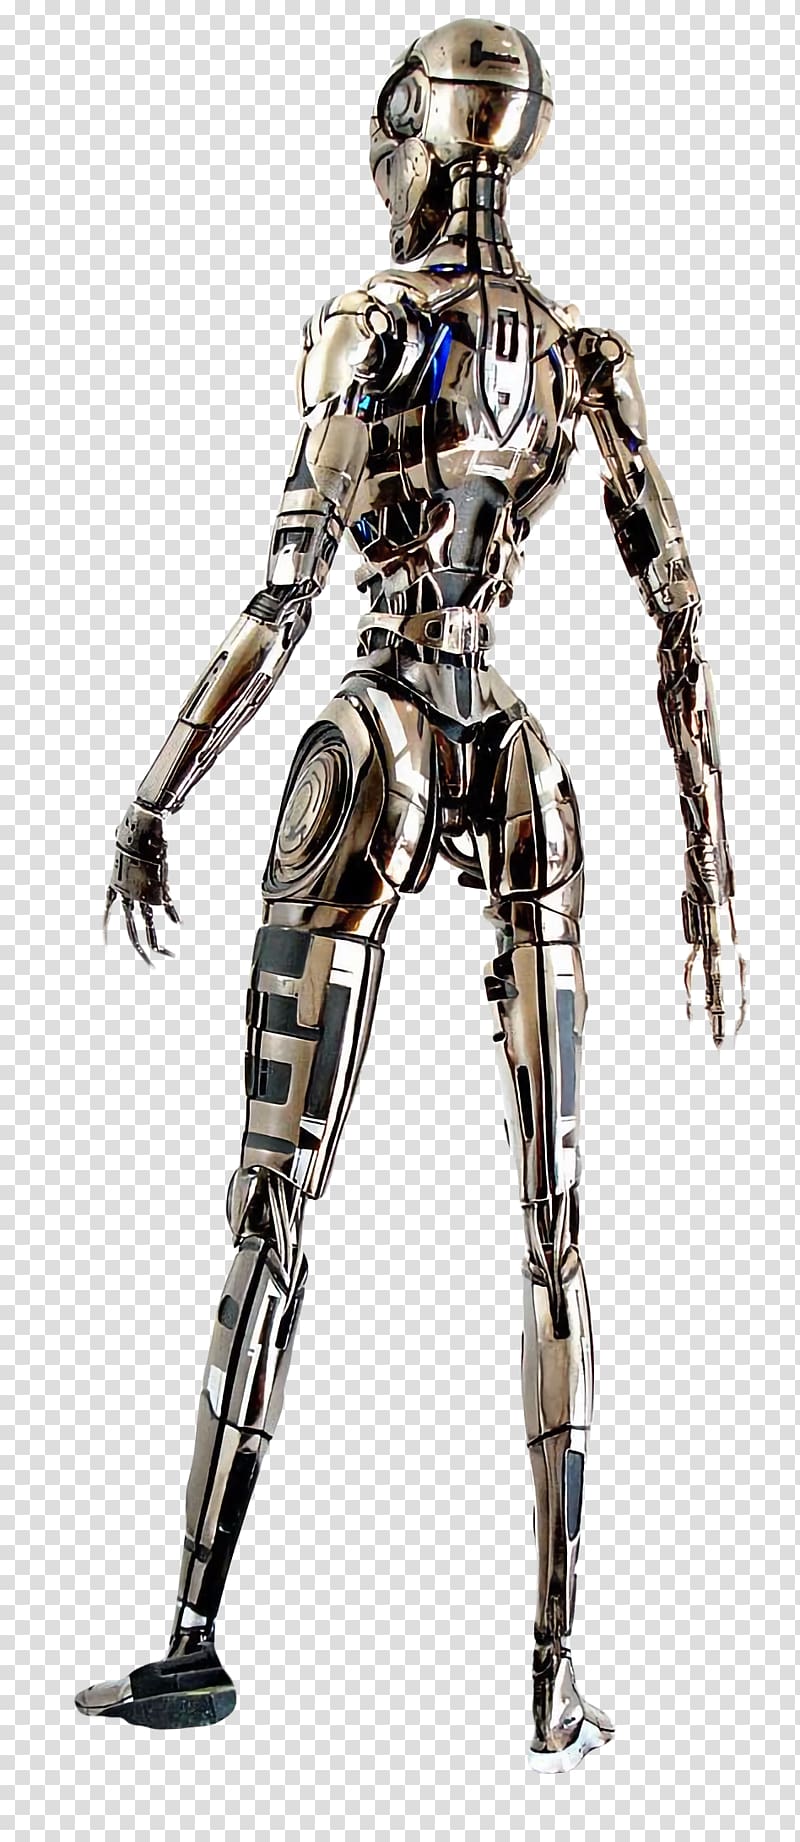 T-X The Terminator Robot Costume, terminator transparent background PNG clipart